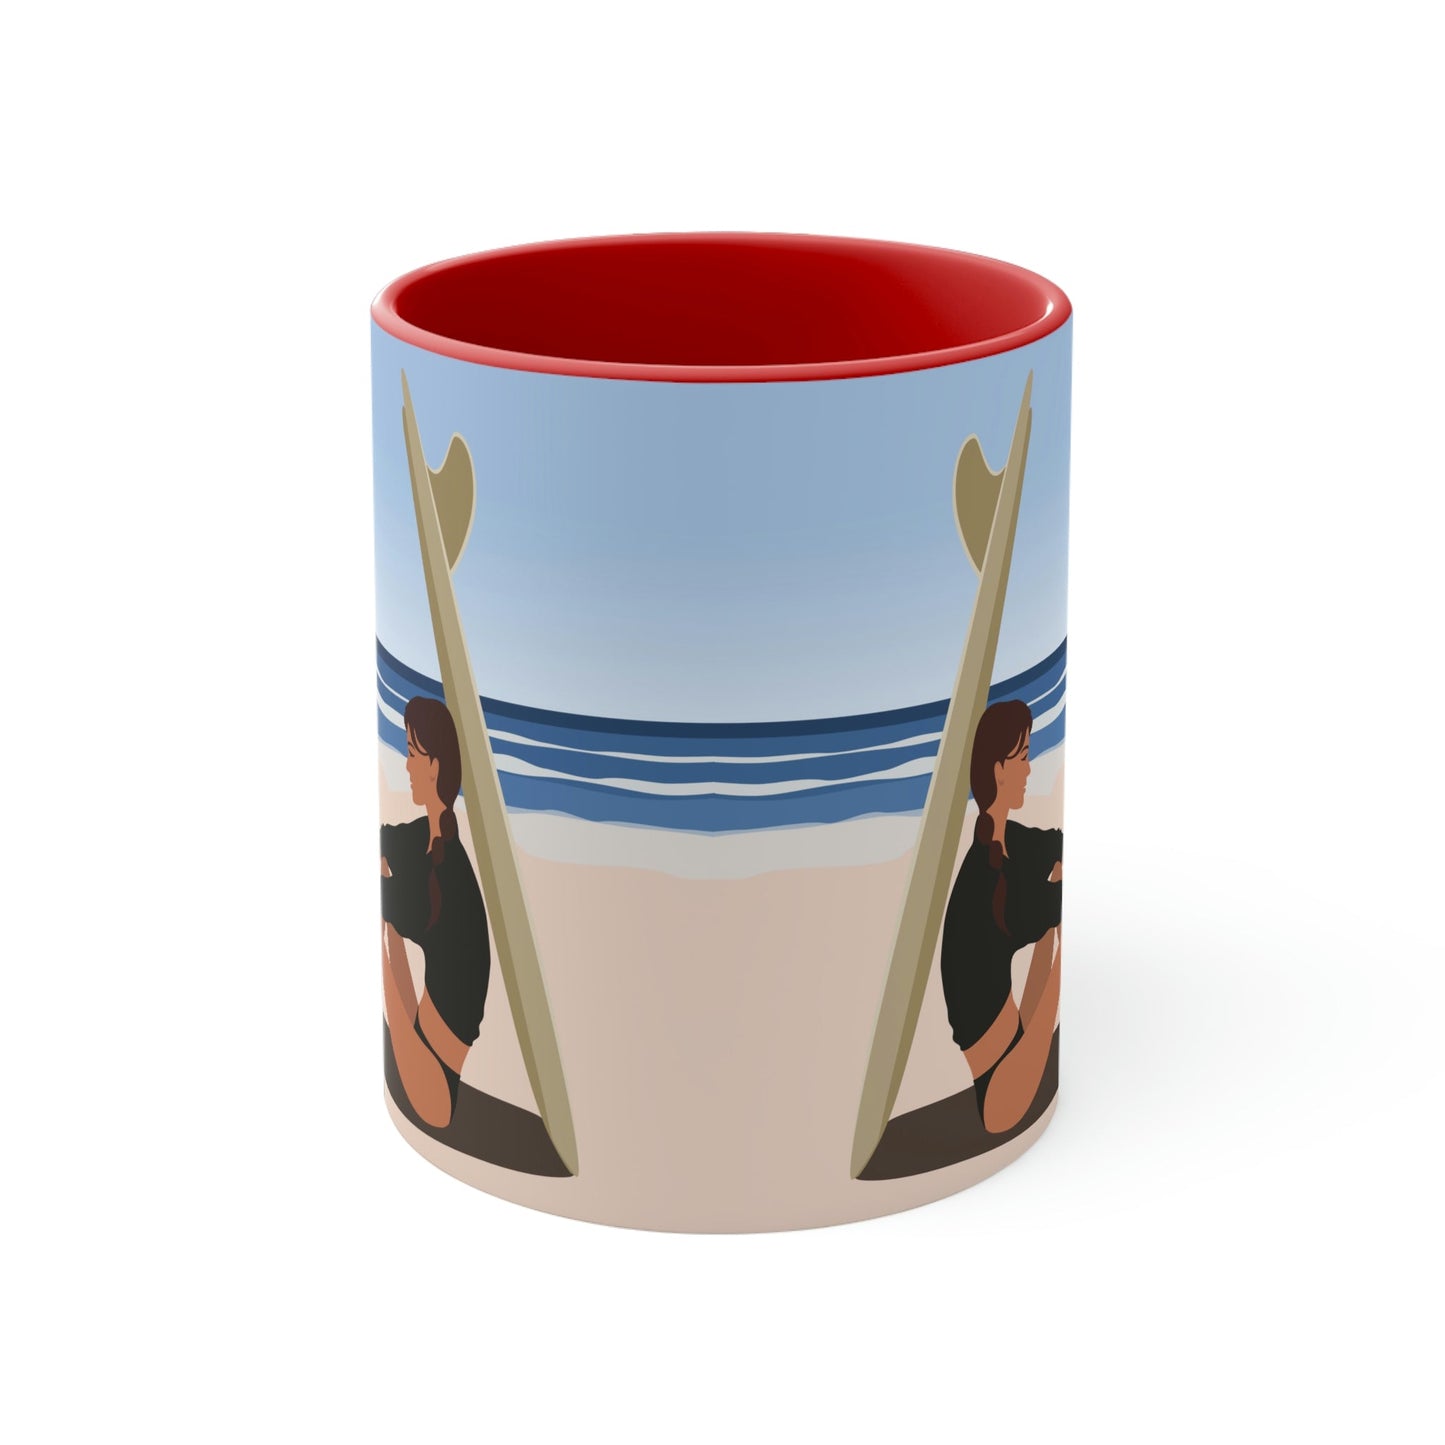 Serenity by the Sea Woman Sitting on Beach Classic Accent Coffee Mug 11oz Ichaku [Perfect Gifts Selection]